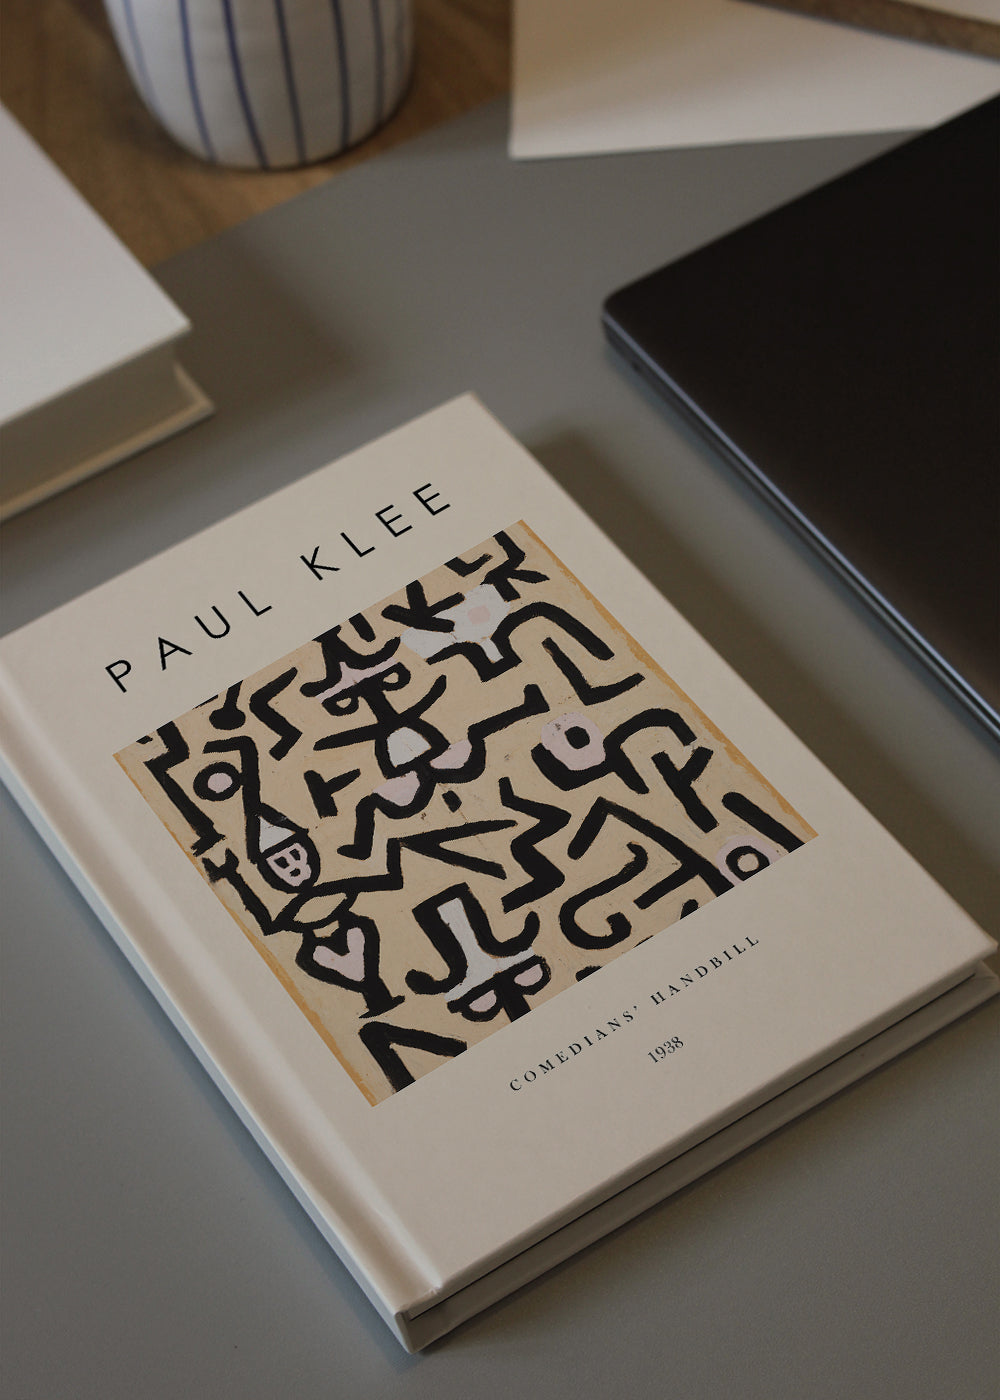 Comedians' Handbill Exhibition - Paul Klee